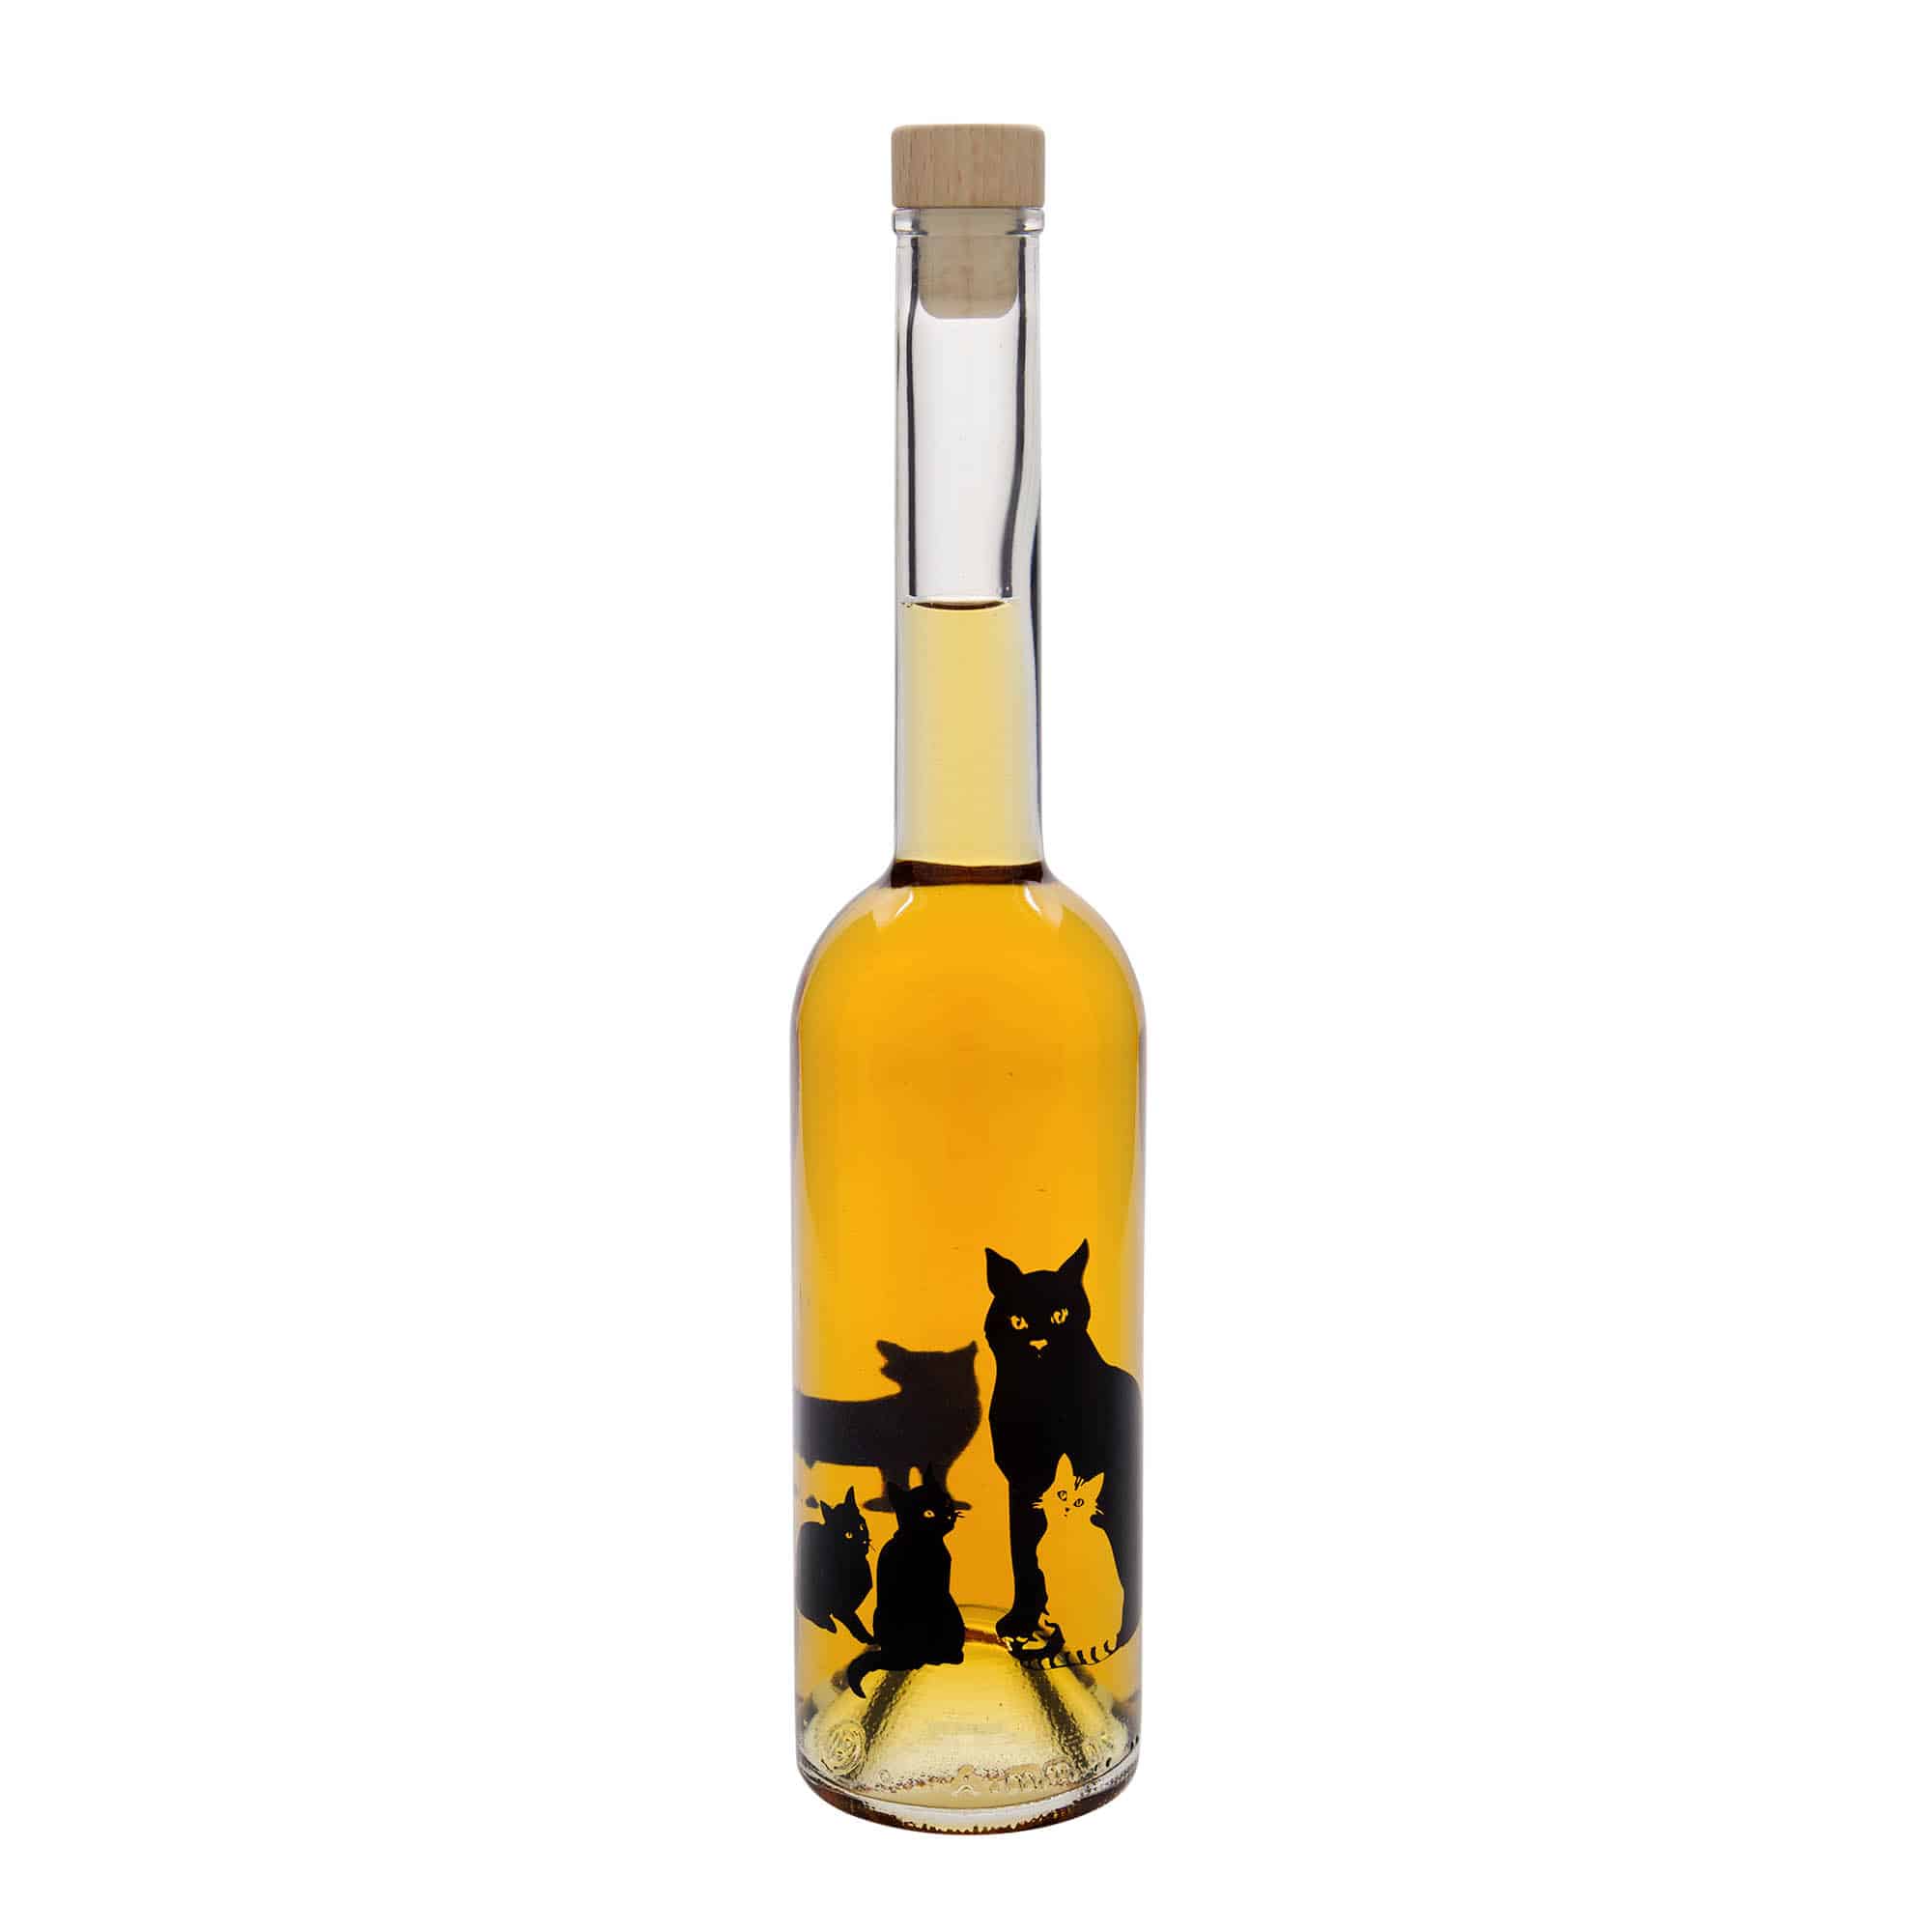 500 ml glass bottle 'Opera', print: cats, closure: cork